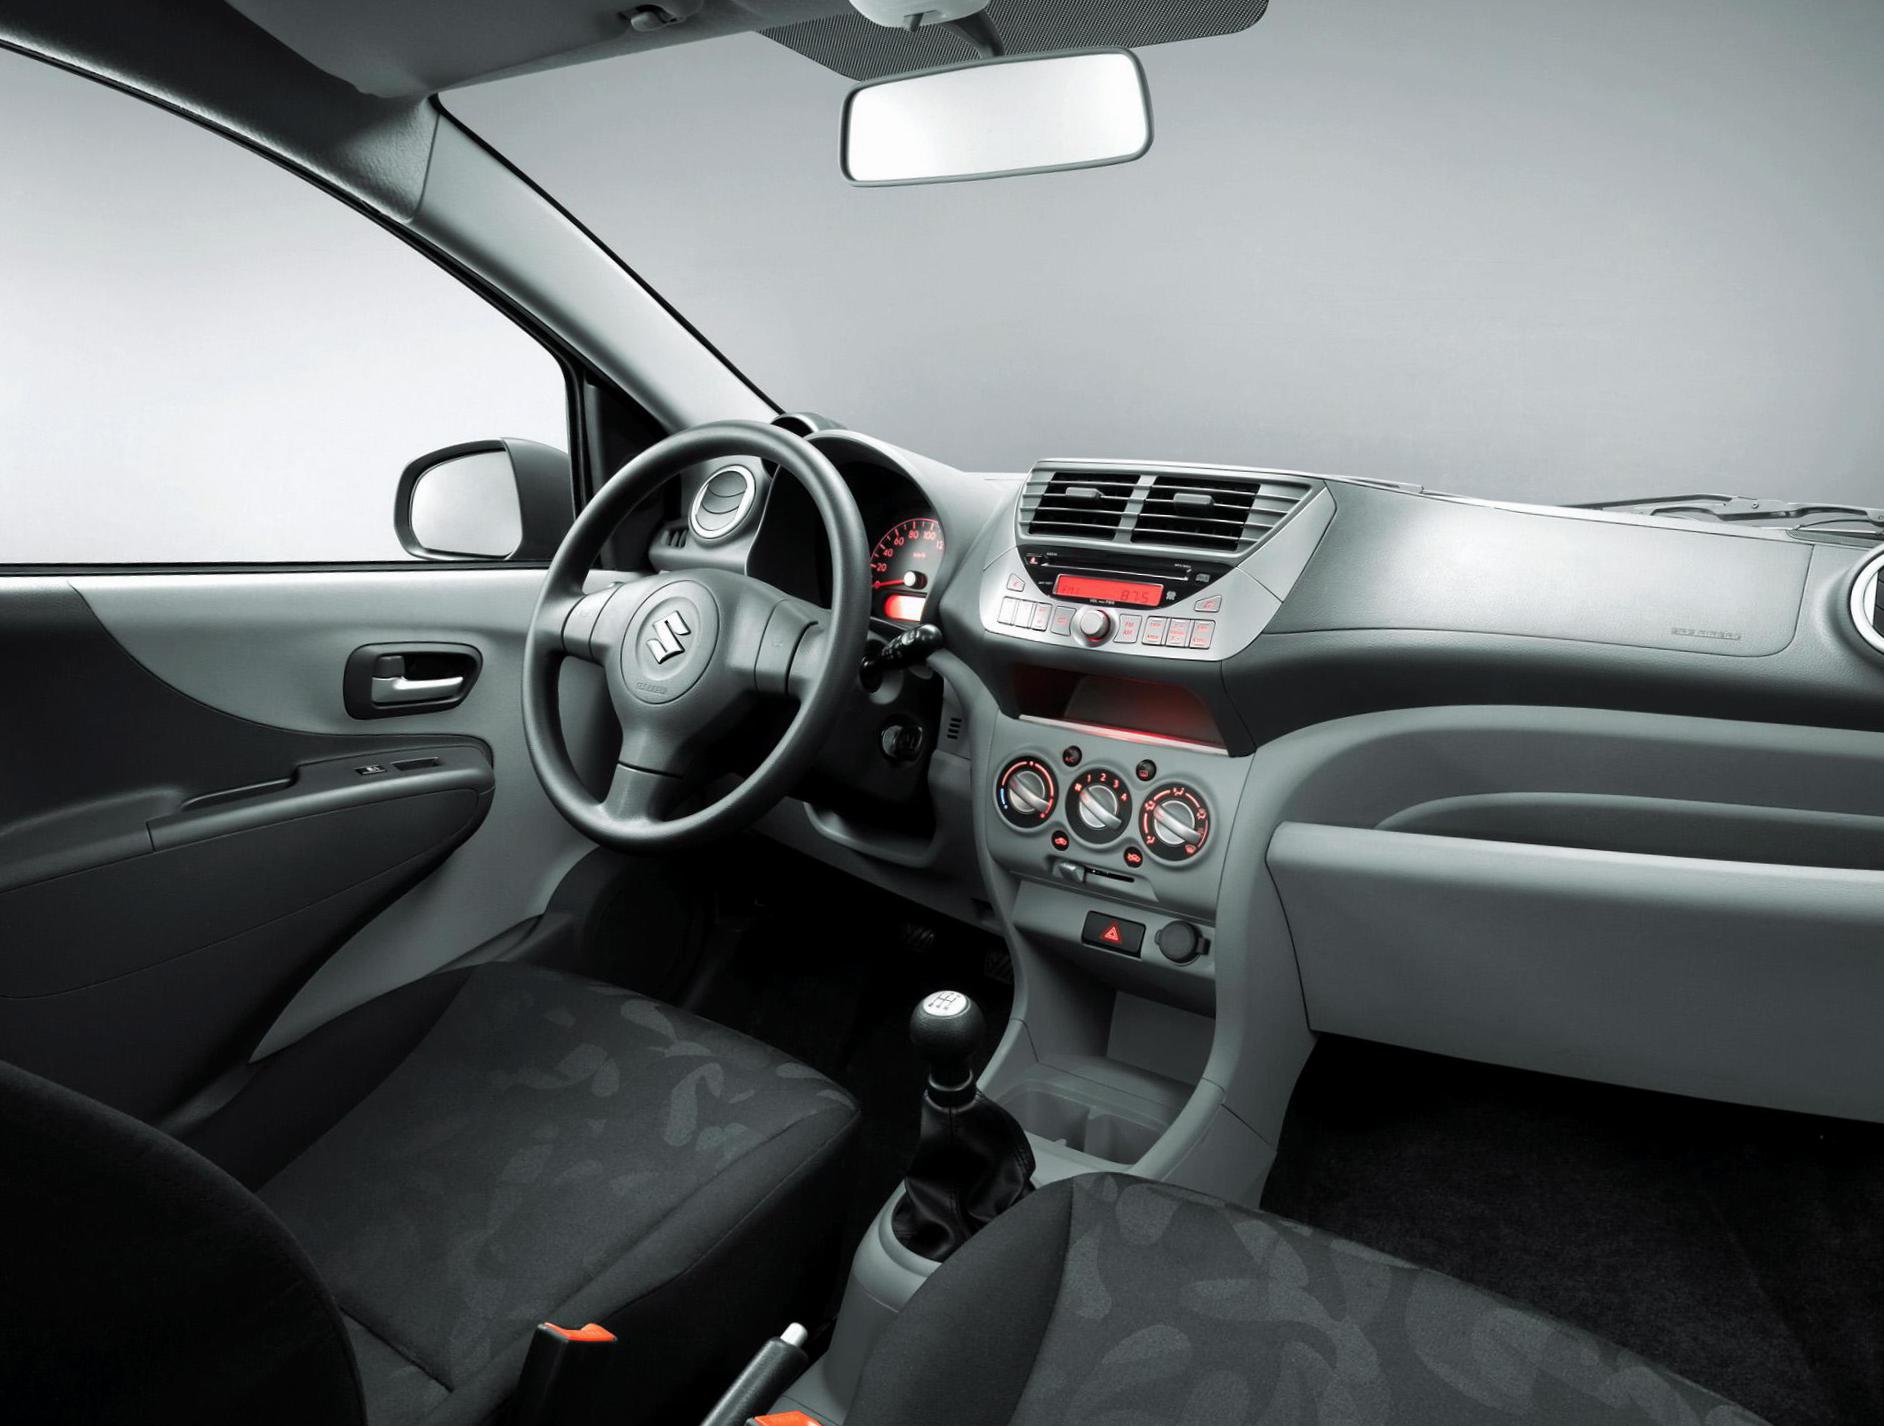 Suzuki Grand Vitara 5 doors Specification sedan